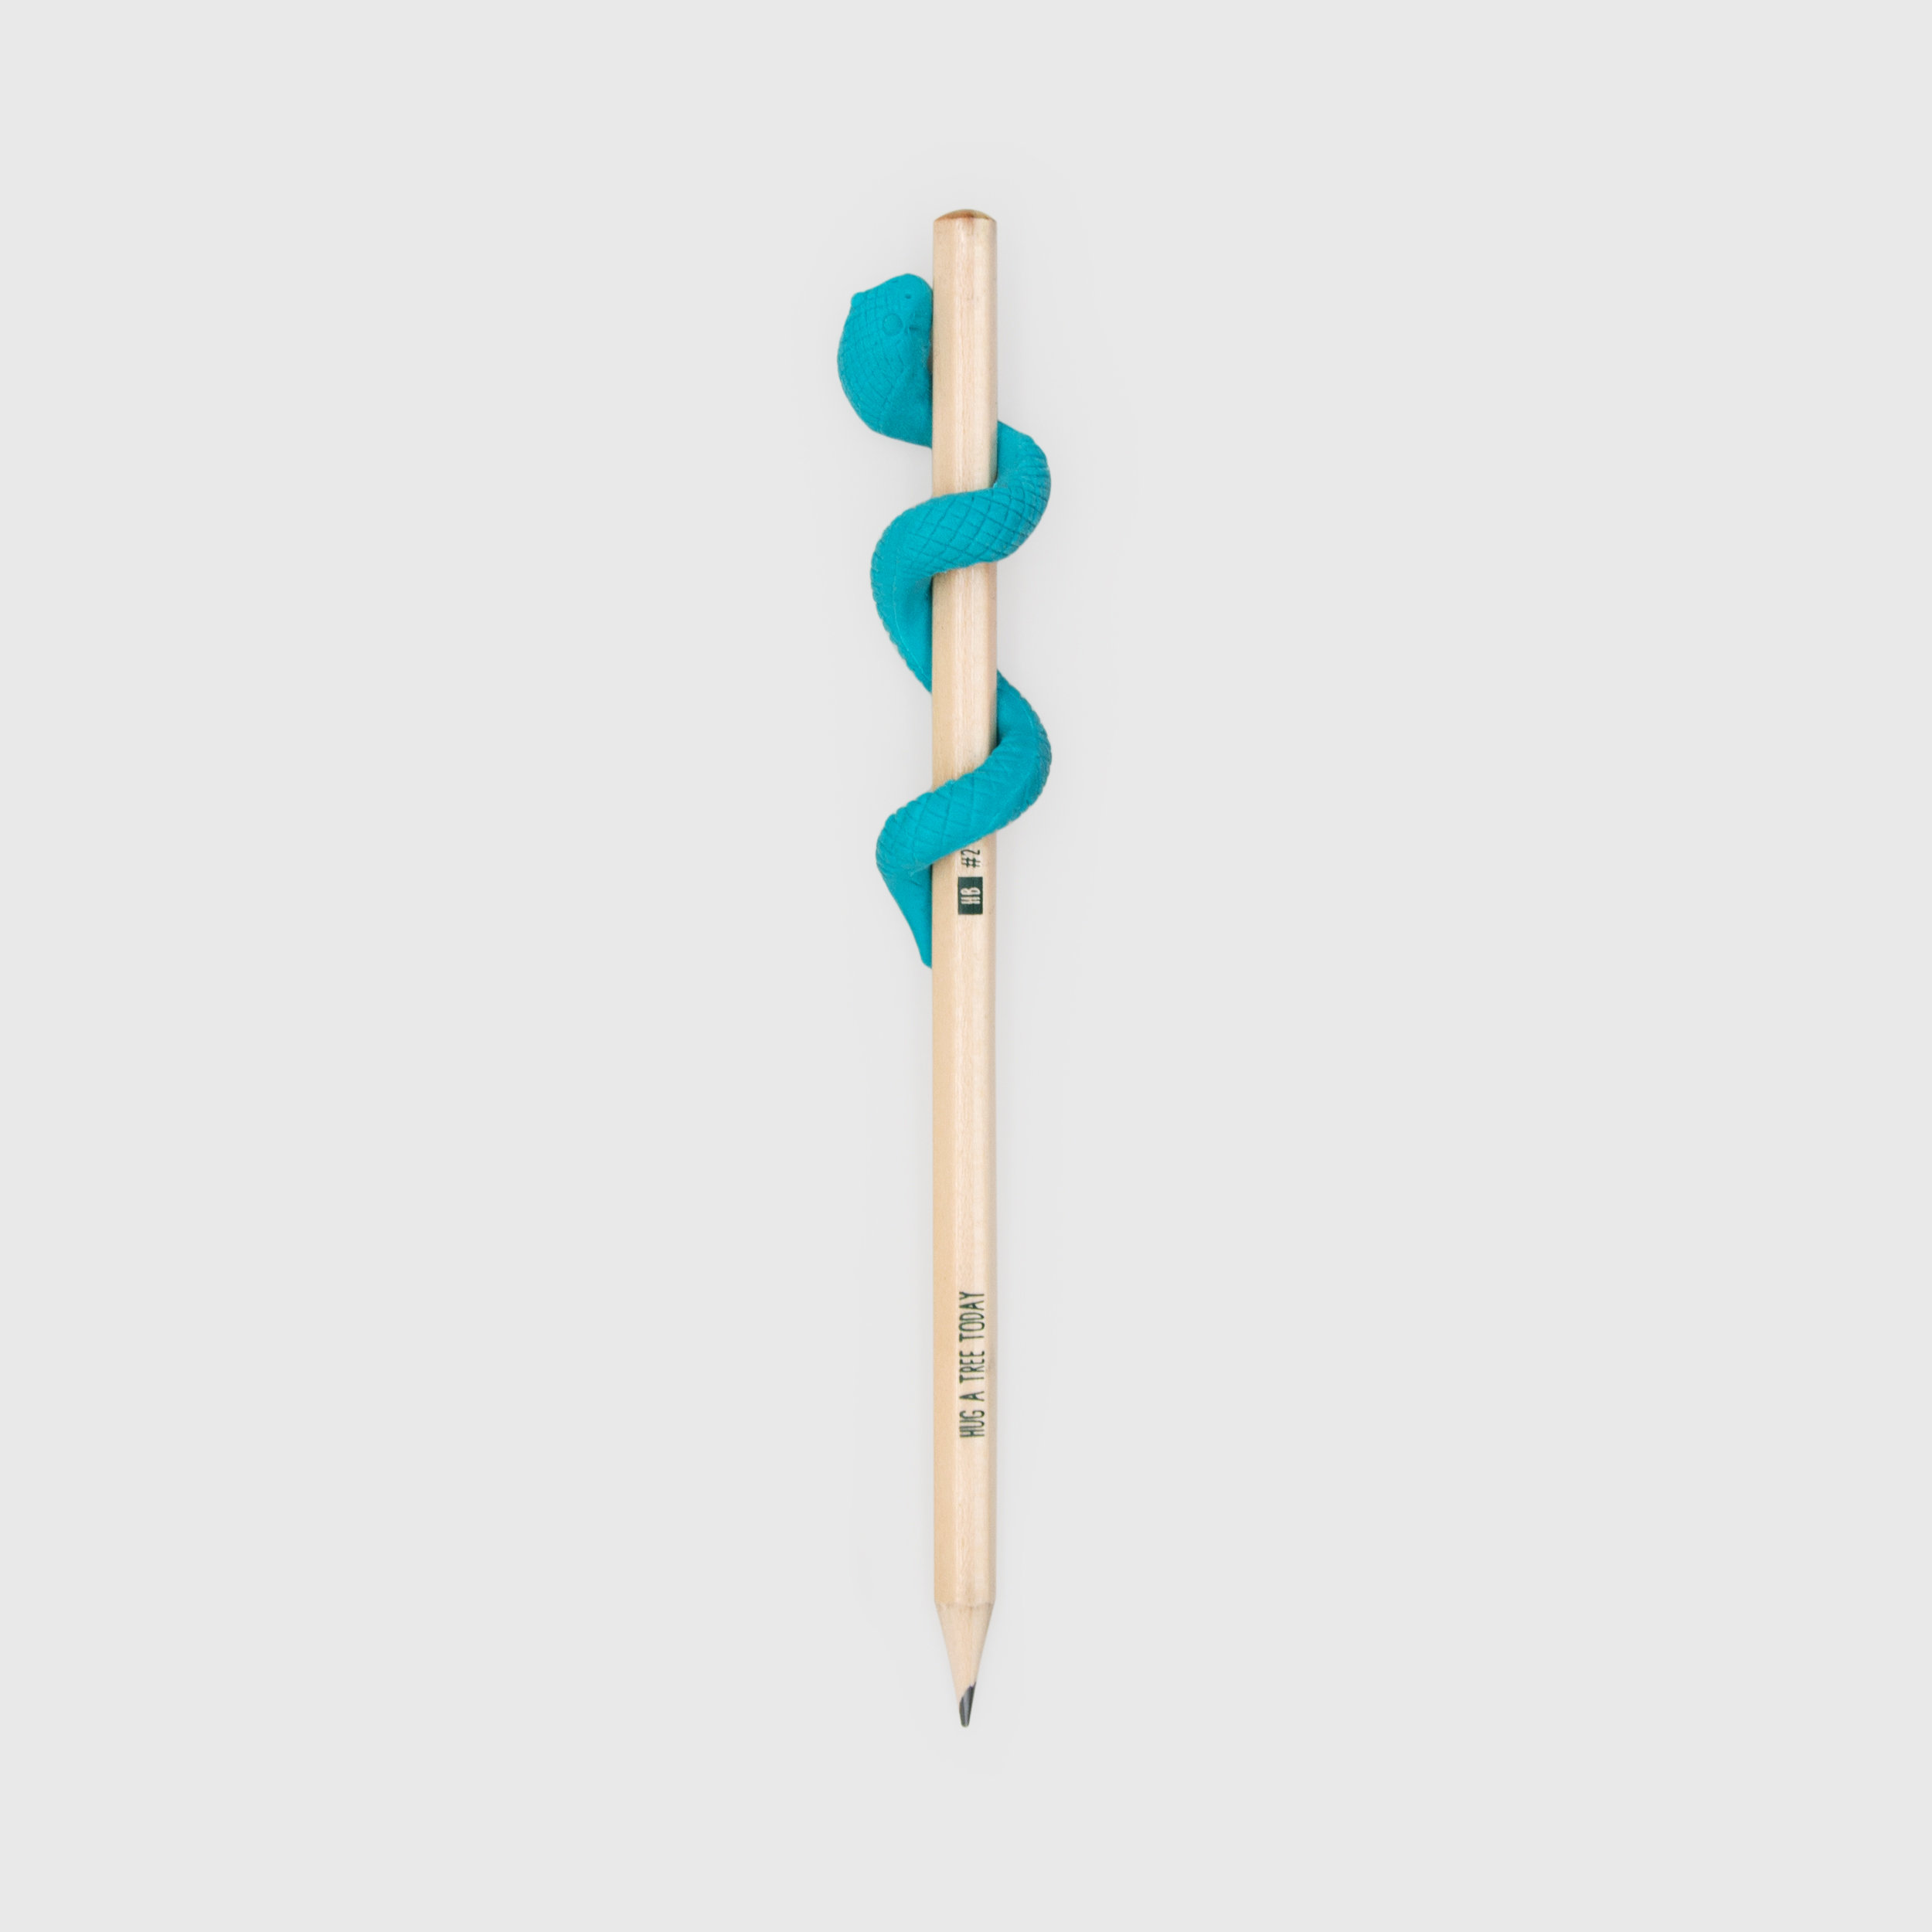 Snake animal eraser on wooden pencil